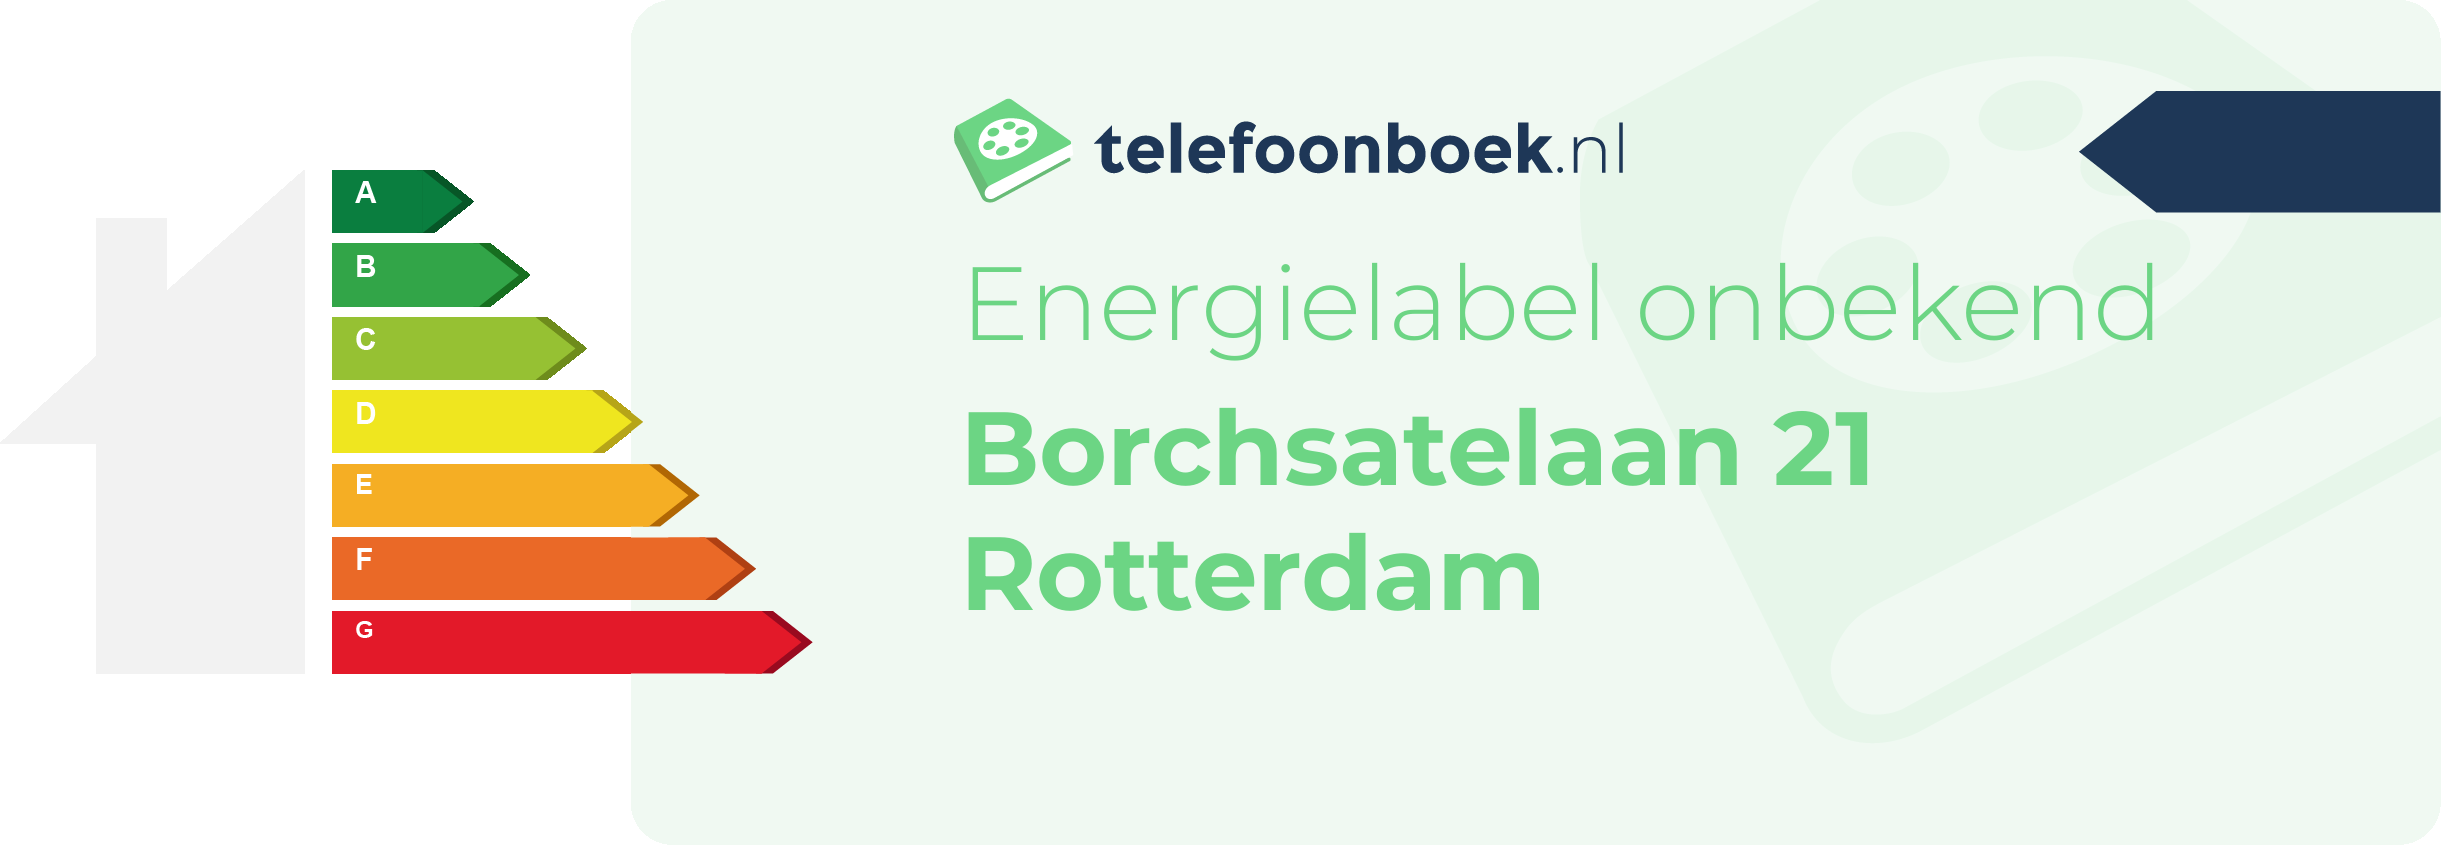 Energielabel Borchsatelaan 21 Rotterdam